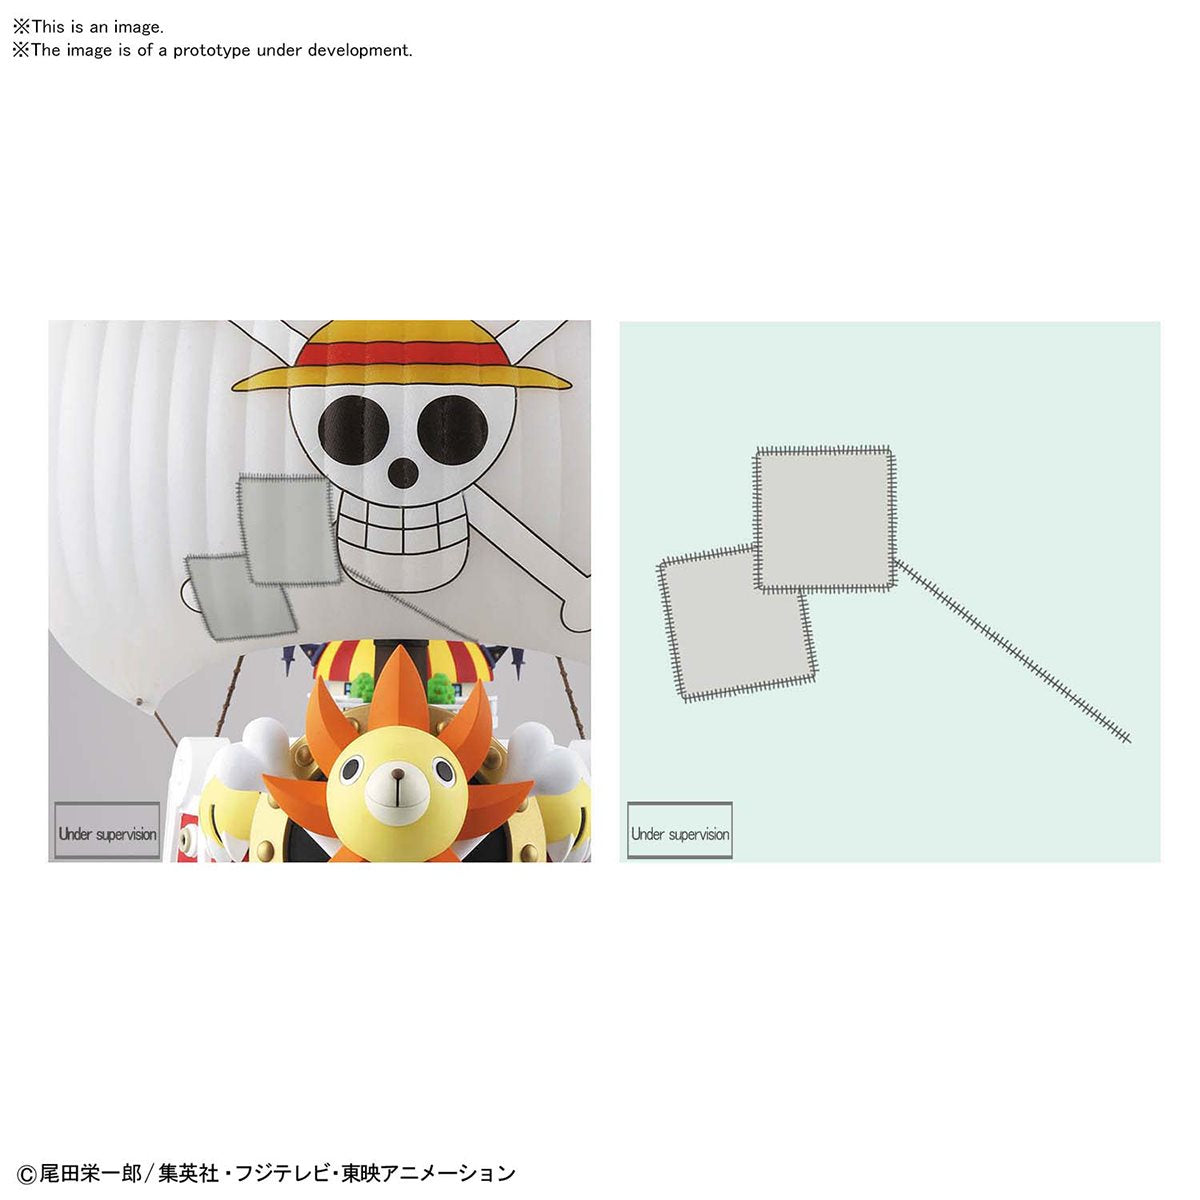 Bandai Hobby Gunpla Model Kit: One Piece - Thousand Sunny Tierra de Wano